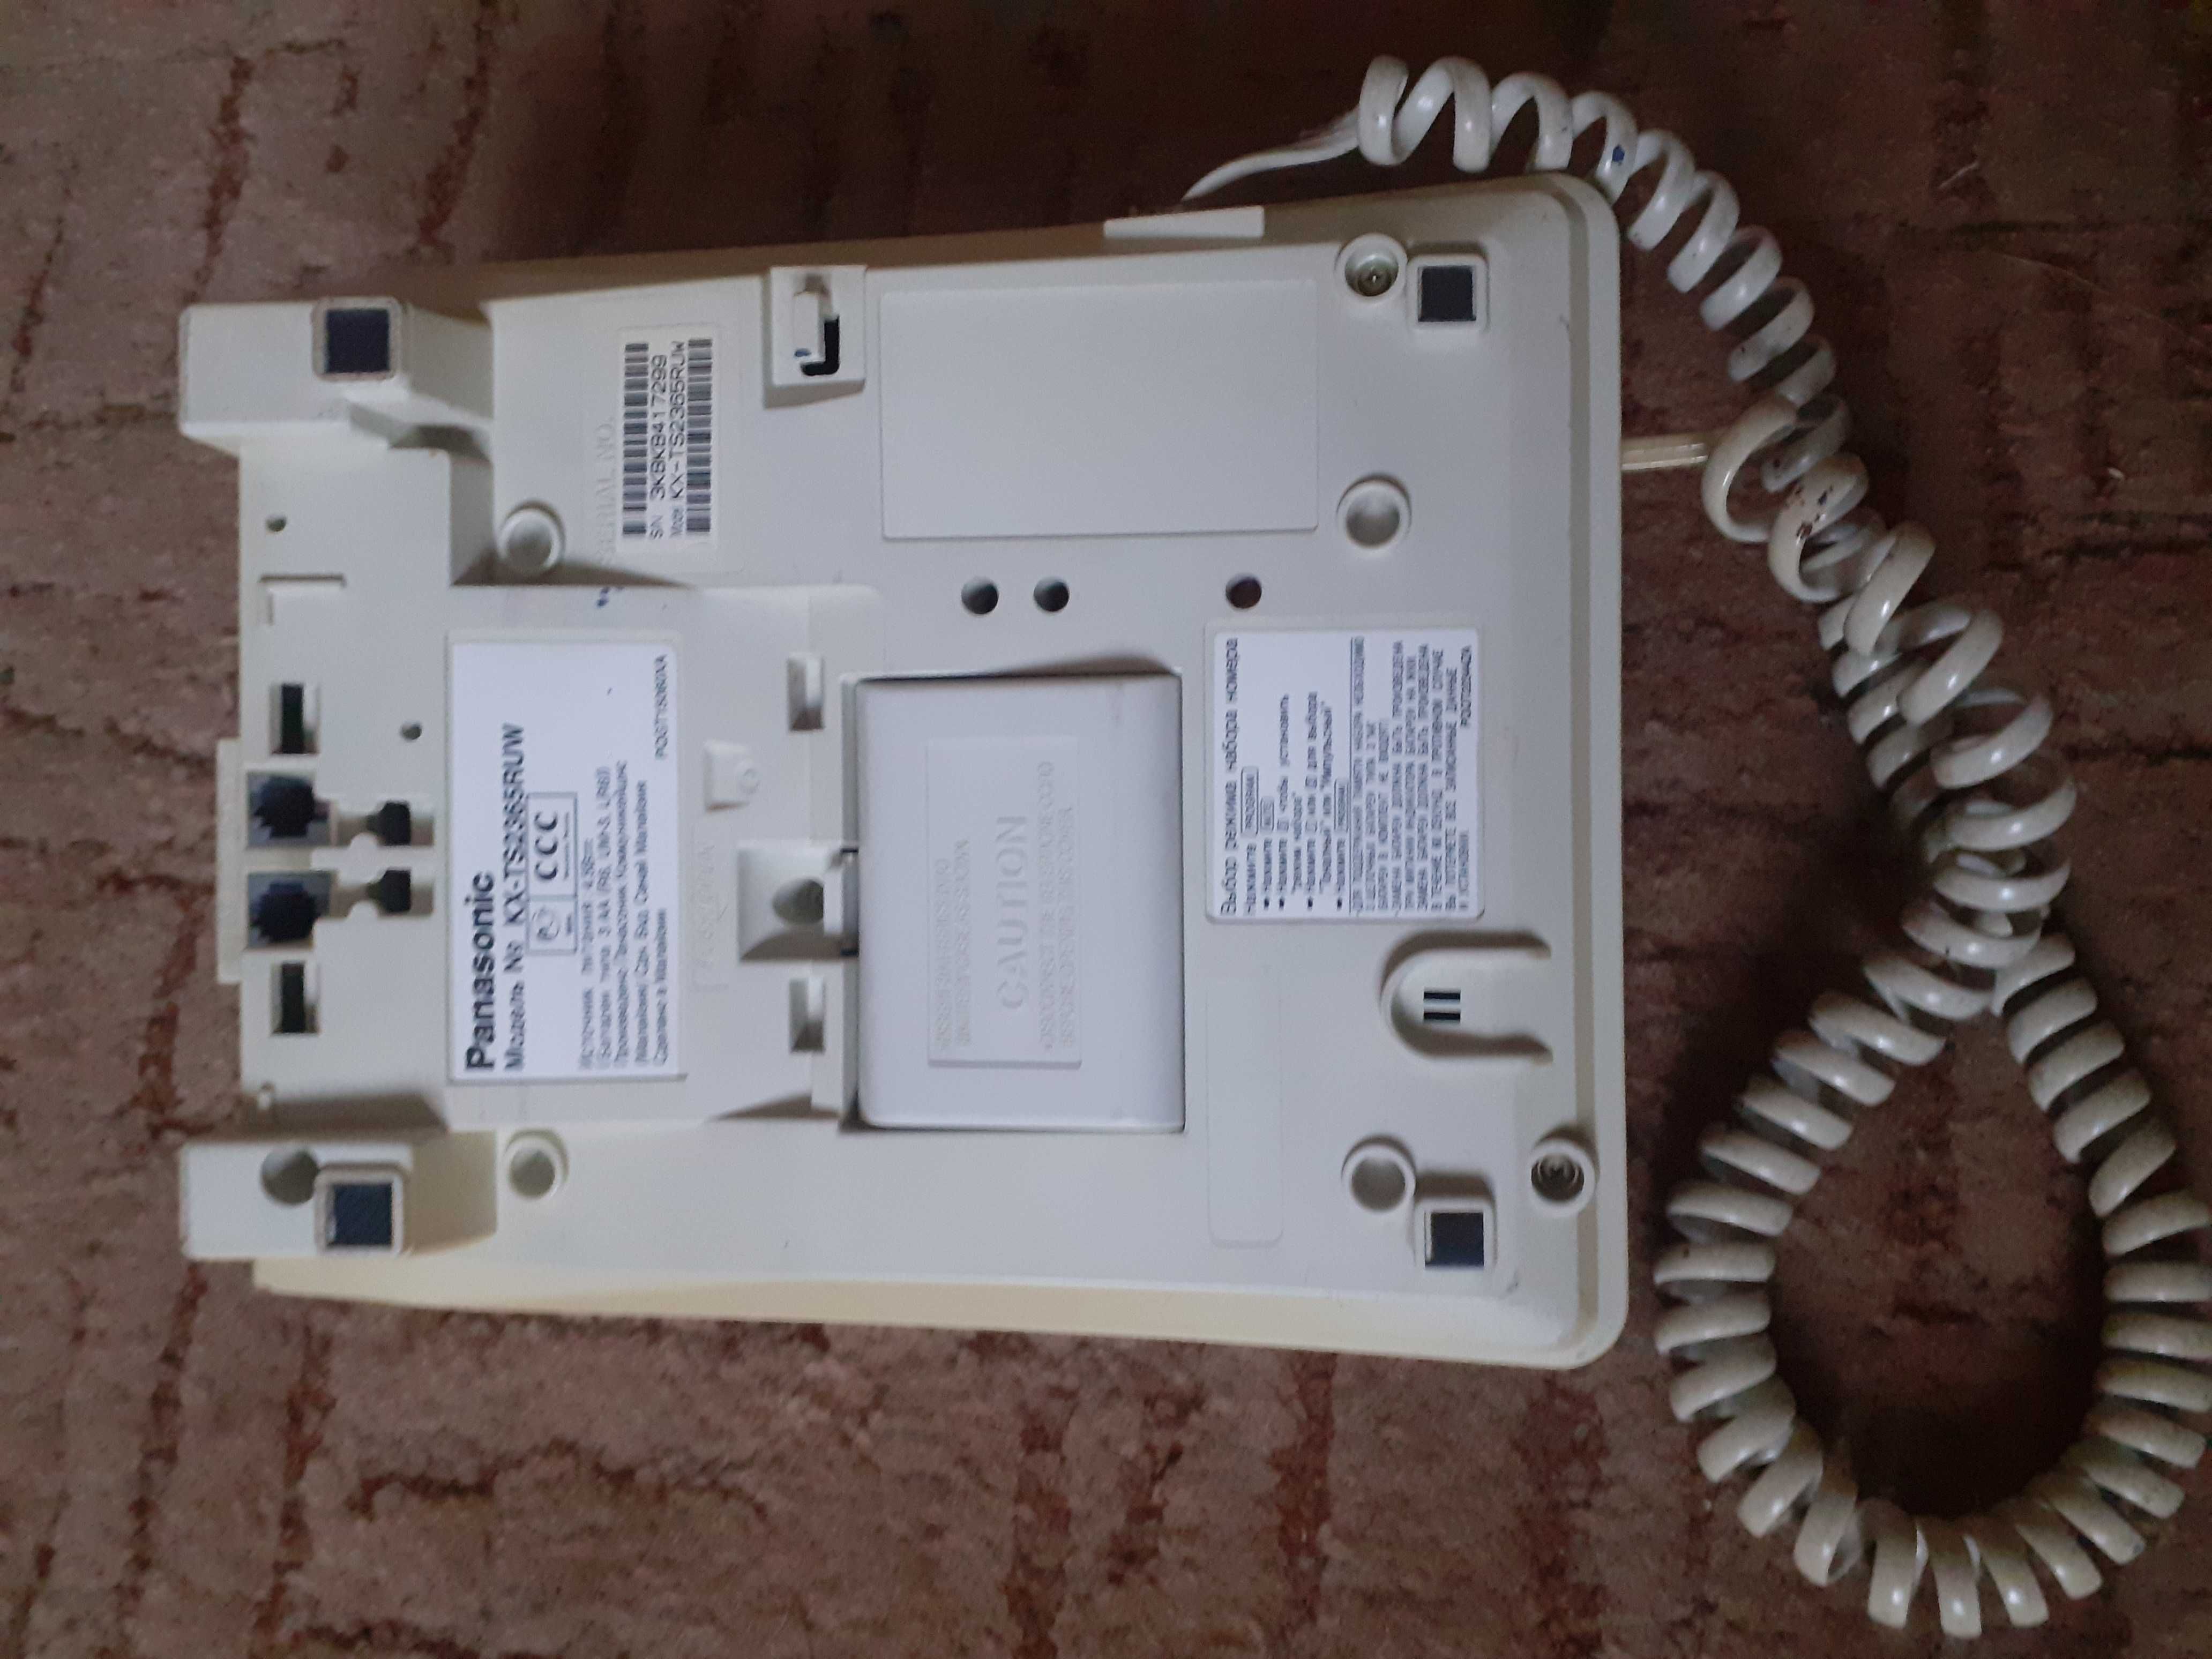 Проводной телефон Panasonic KX-TS2365RUW